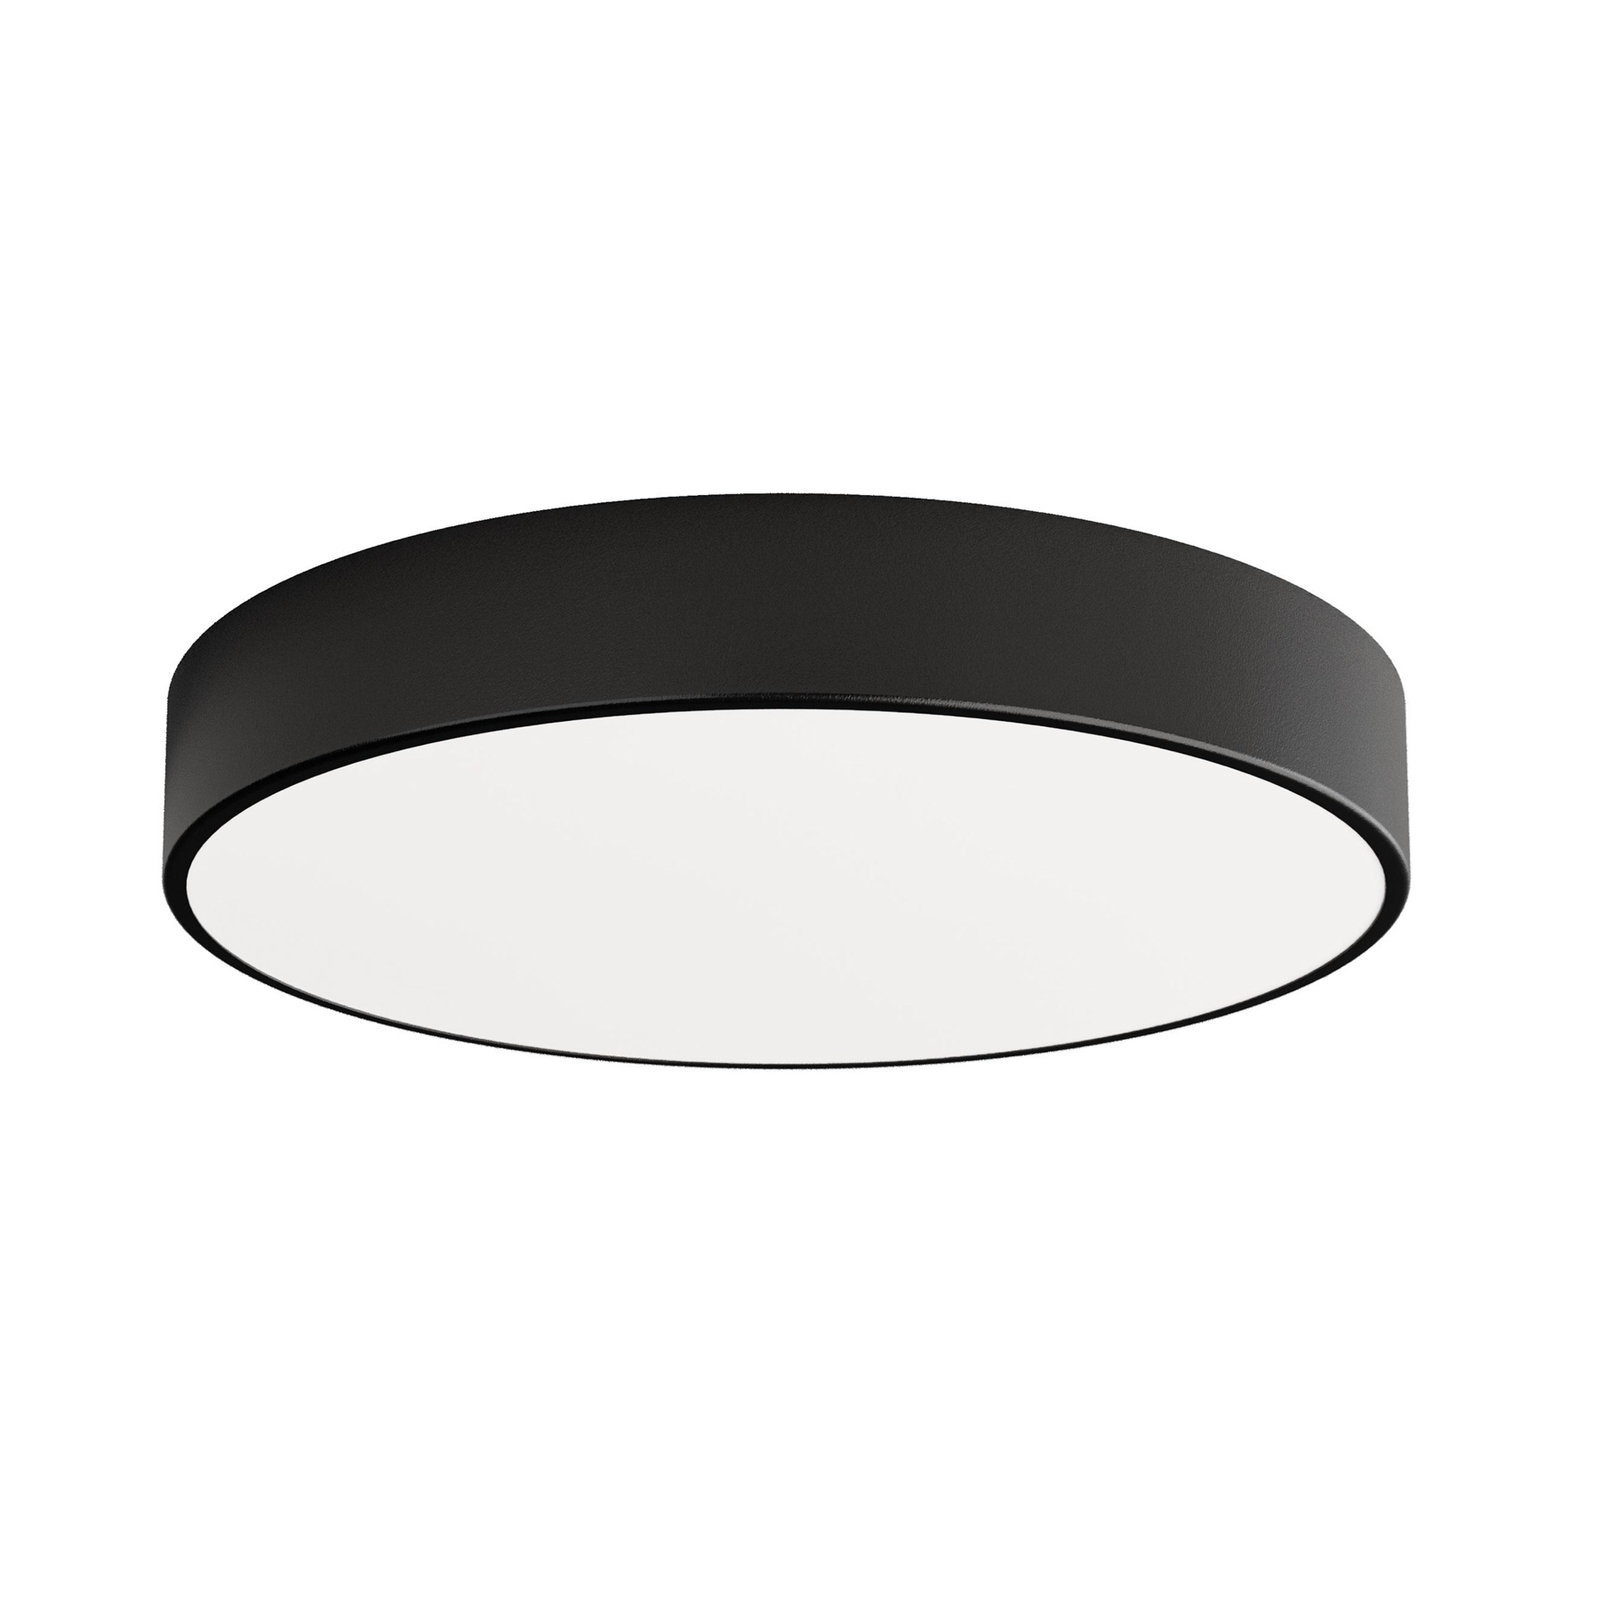 Cleo ceiling light, black, Ø 50 cm, metal, IP54